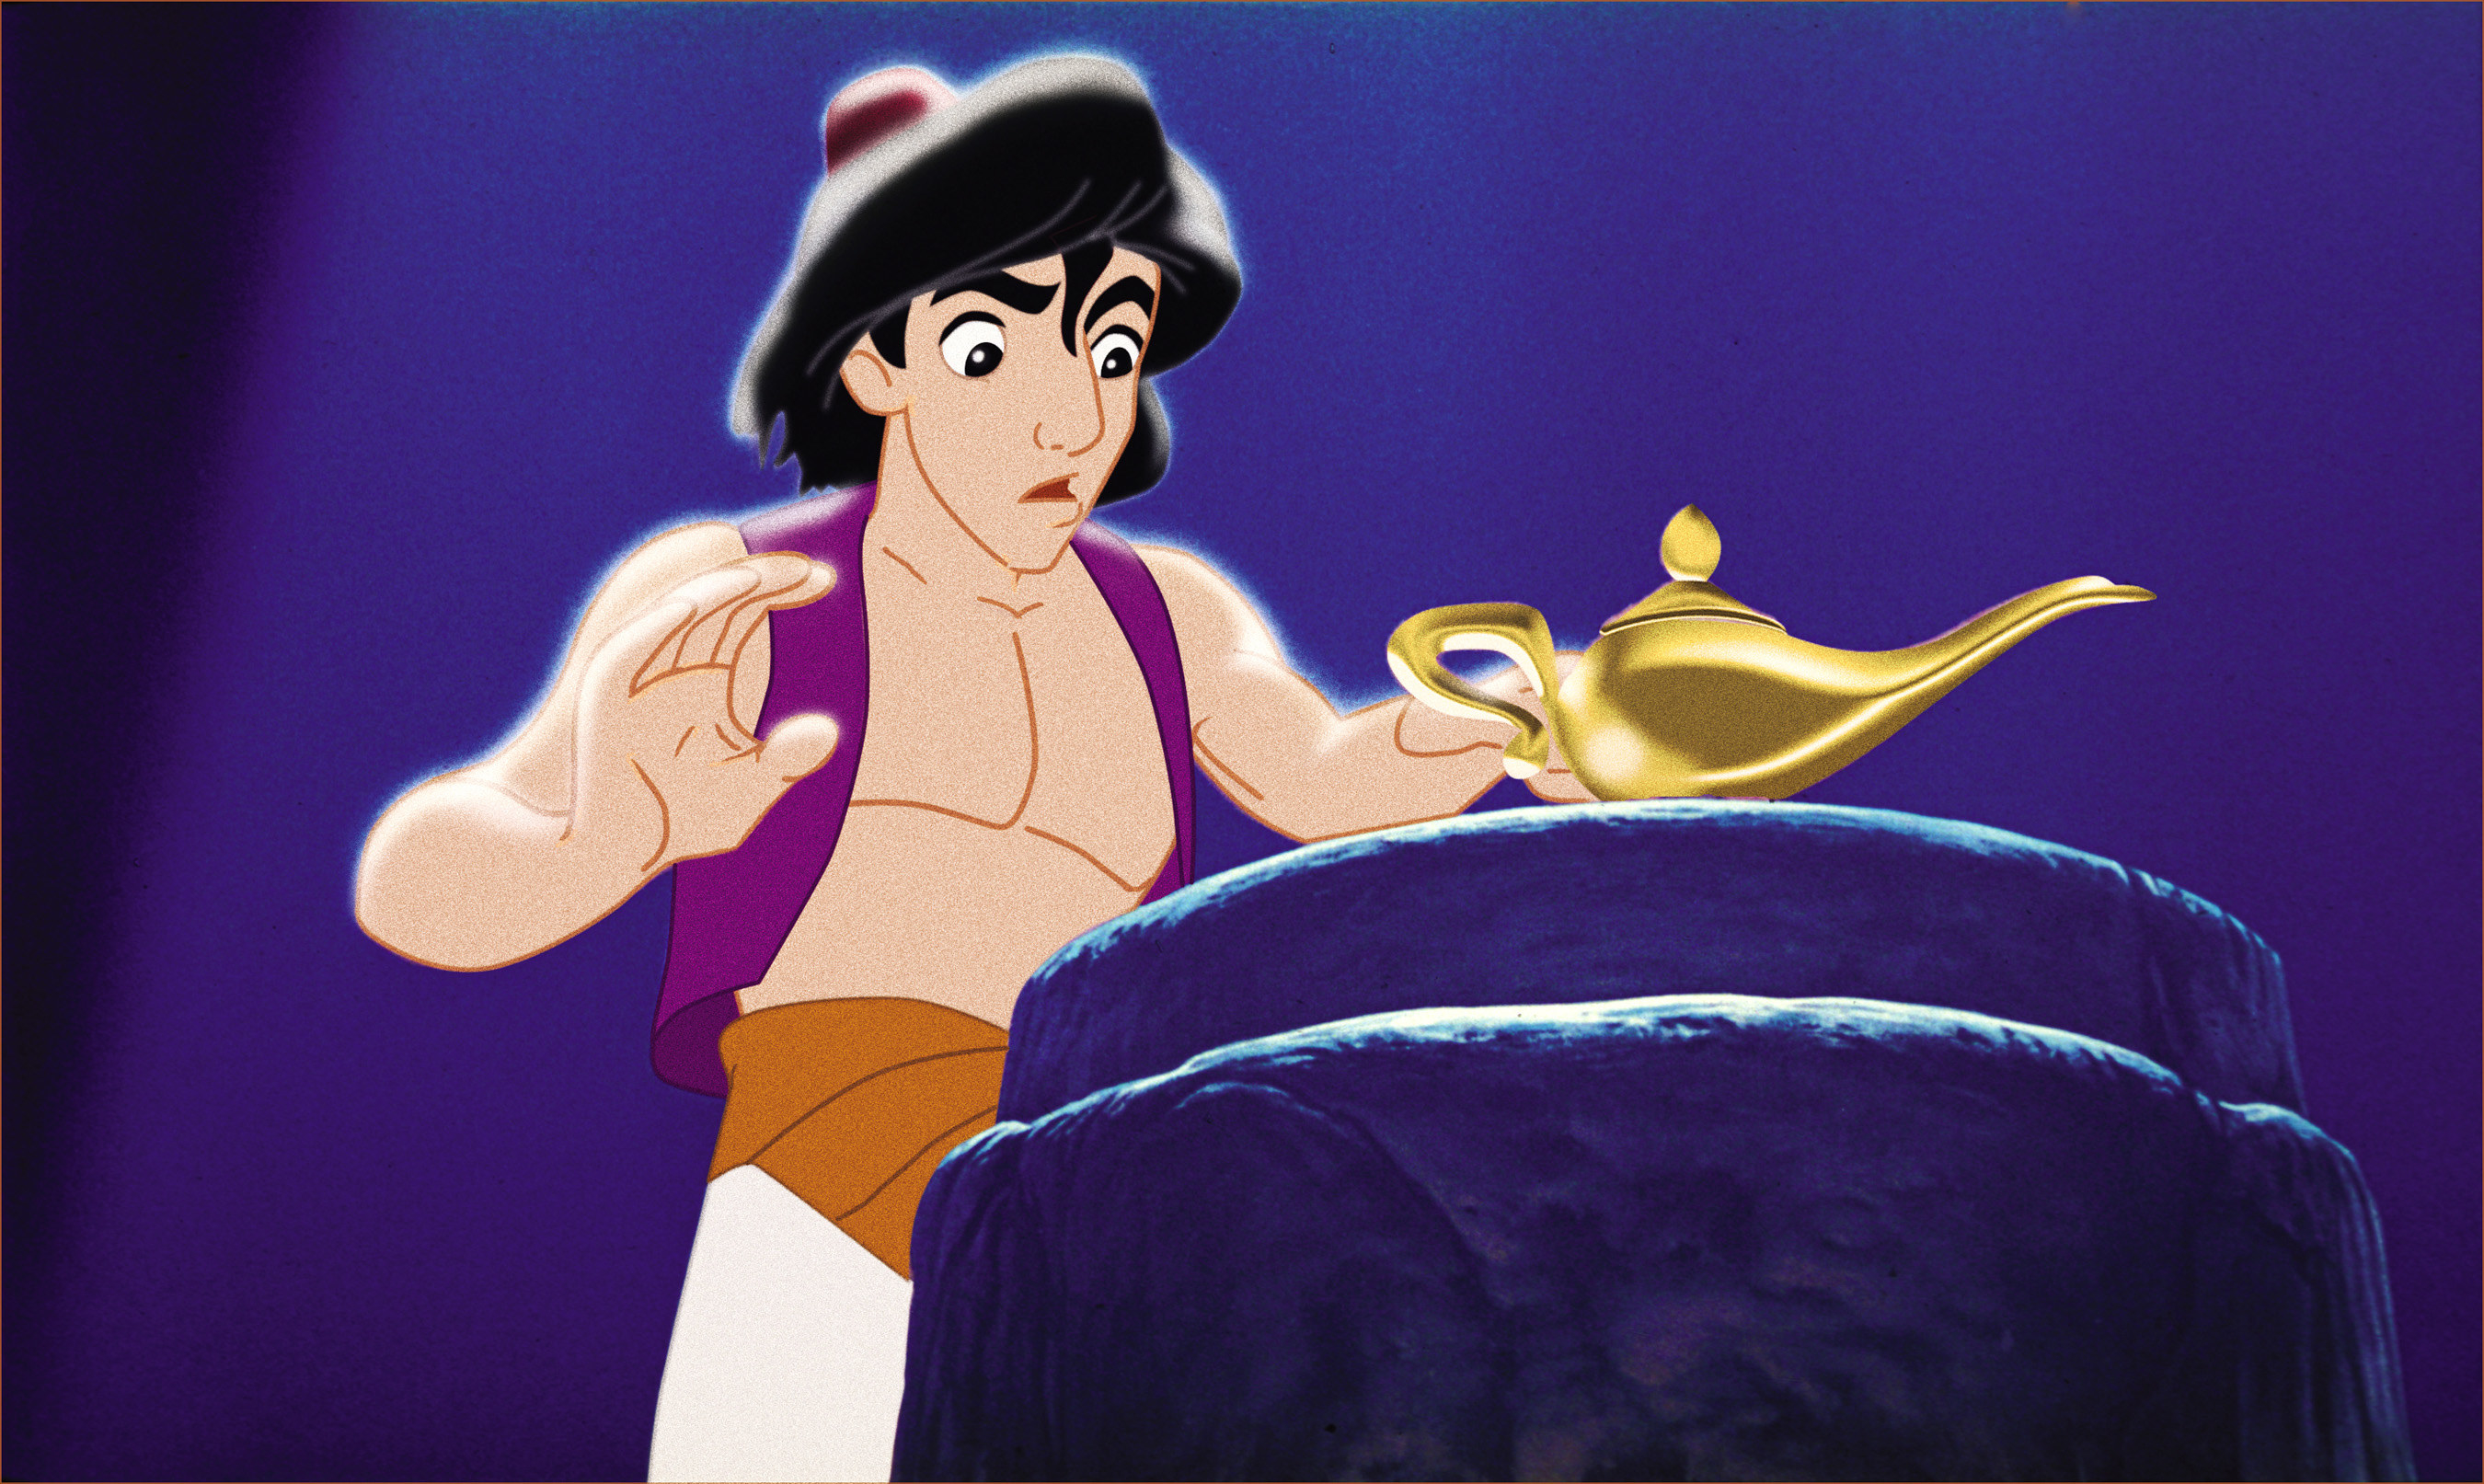 The animated version of Aladdin